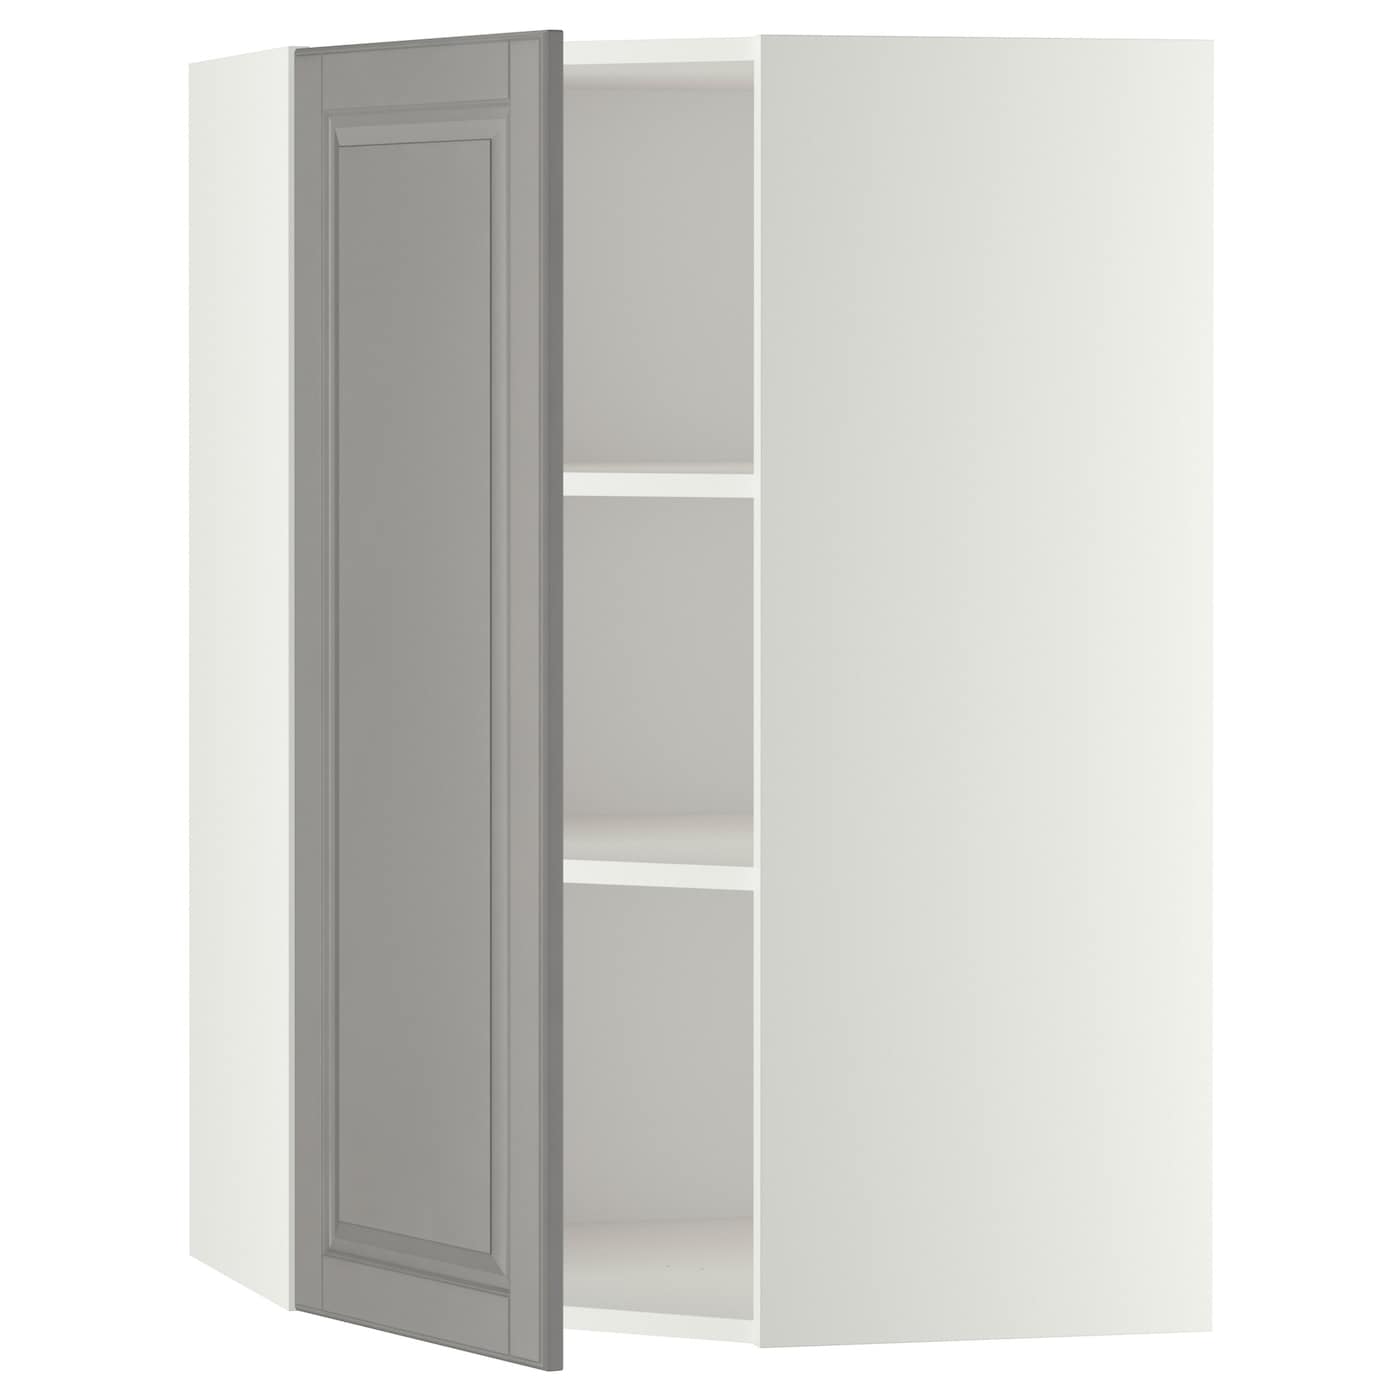 METOD Навесной шкаф - METOD IKEA/ МЕТОД ИКЕА, 100х68 см, белый/серый